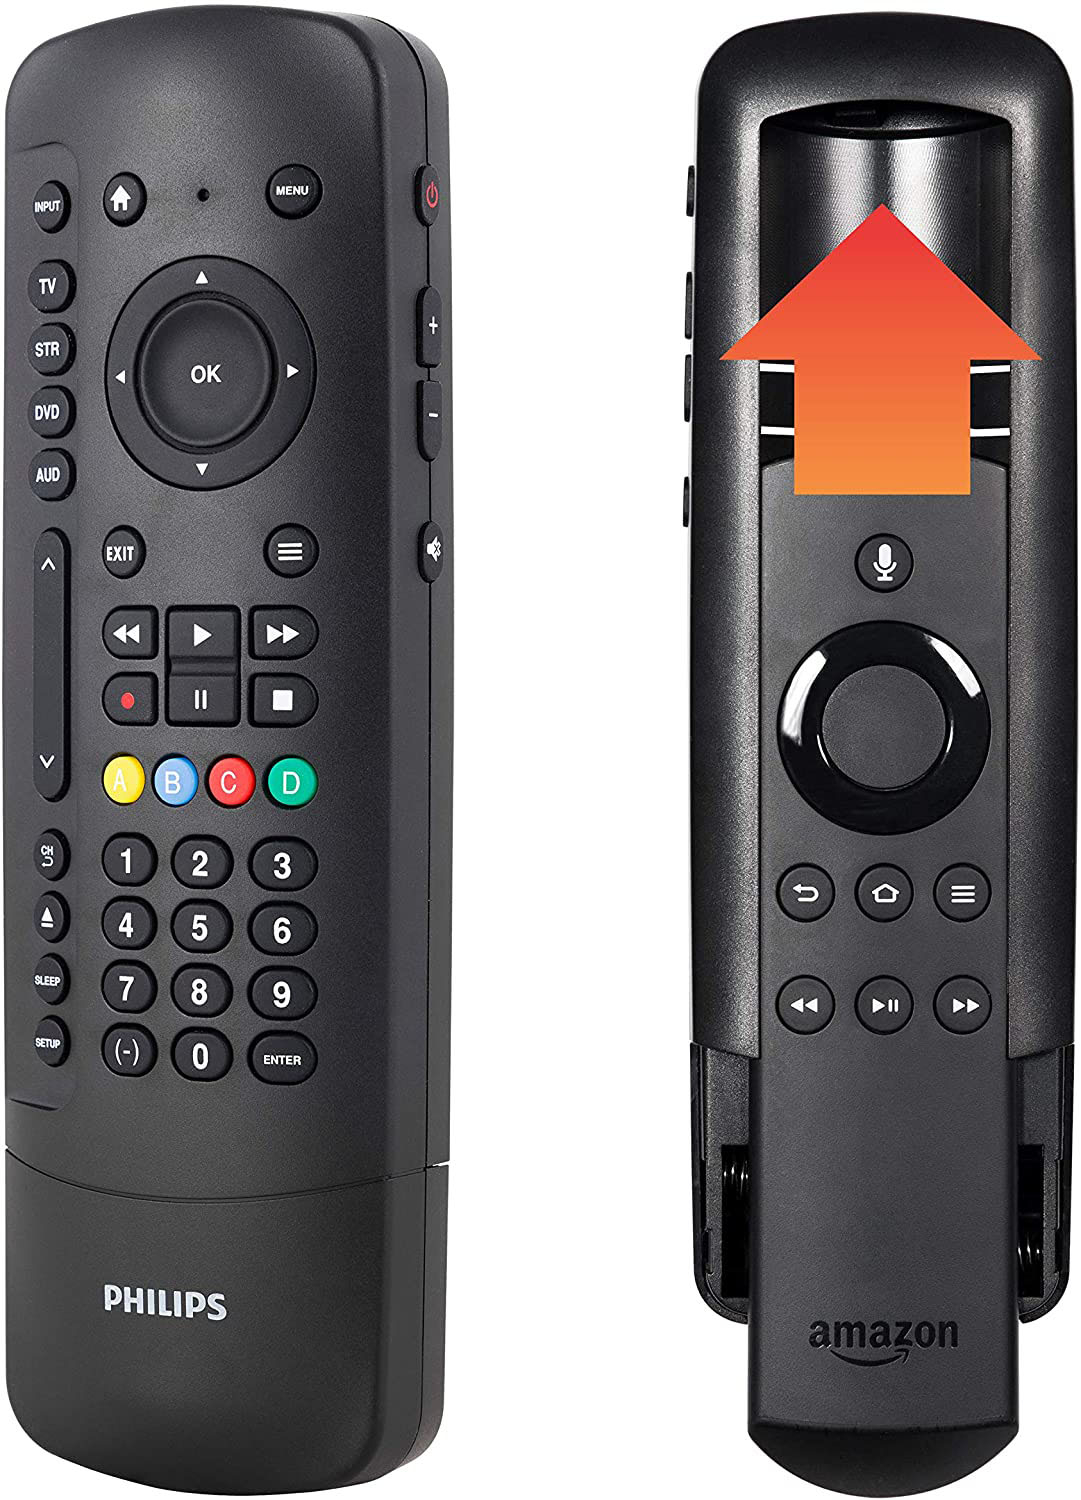 Bose Soundbar Universal Remote